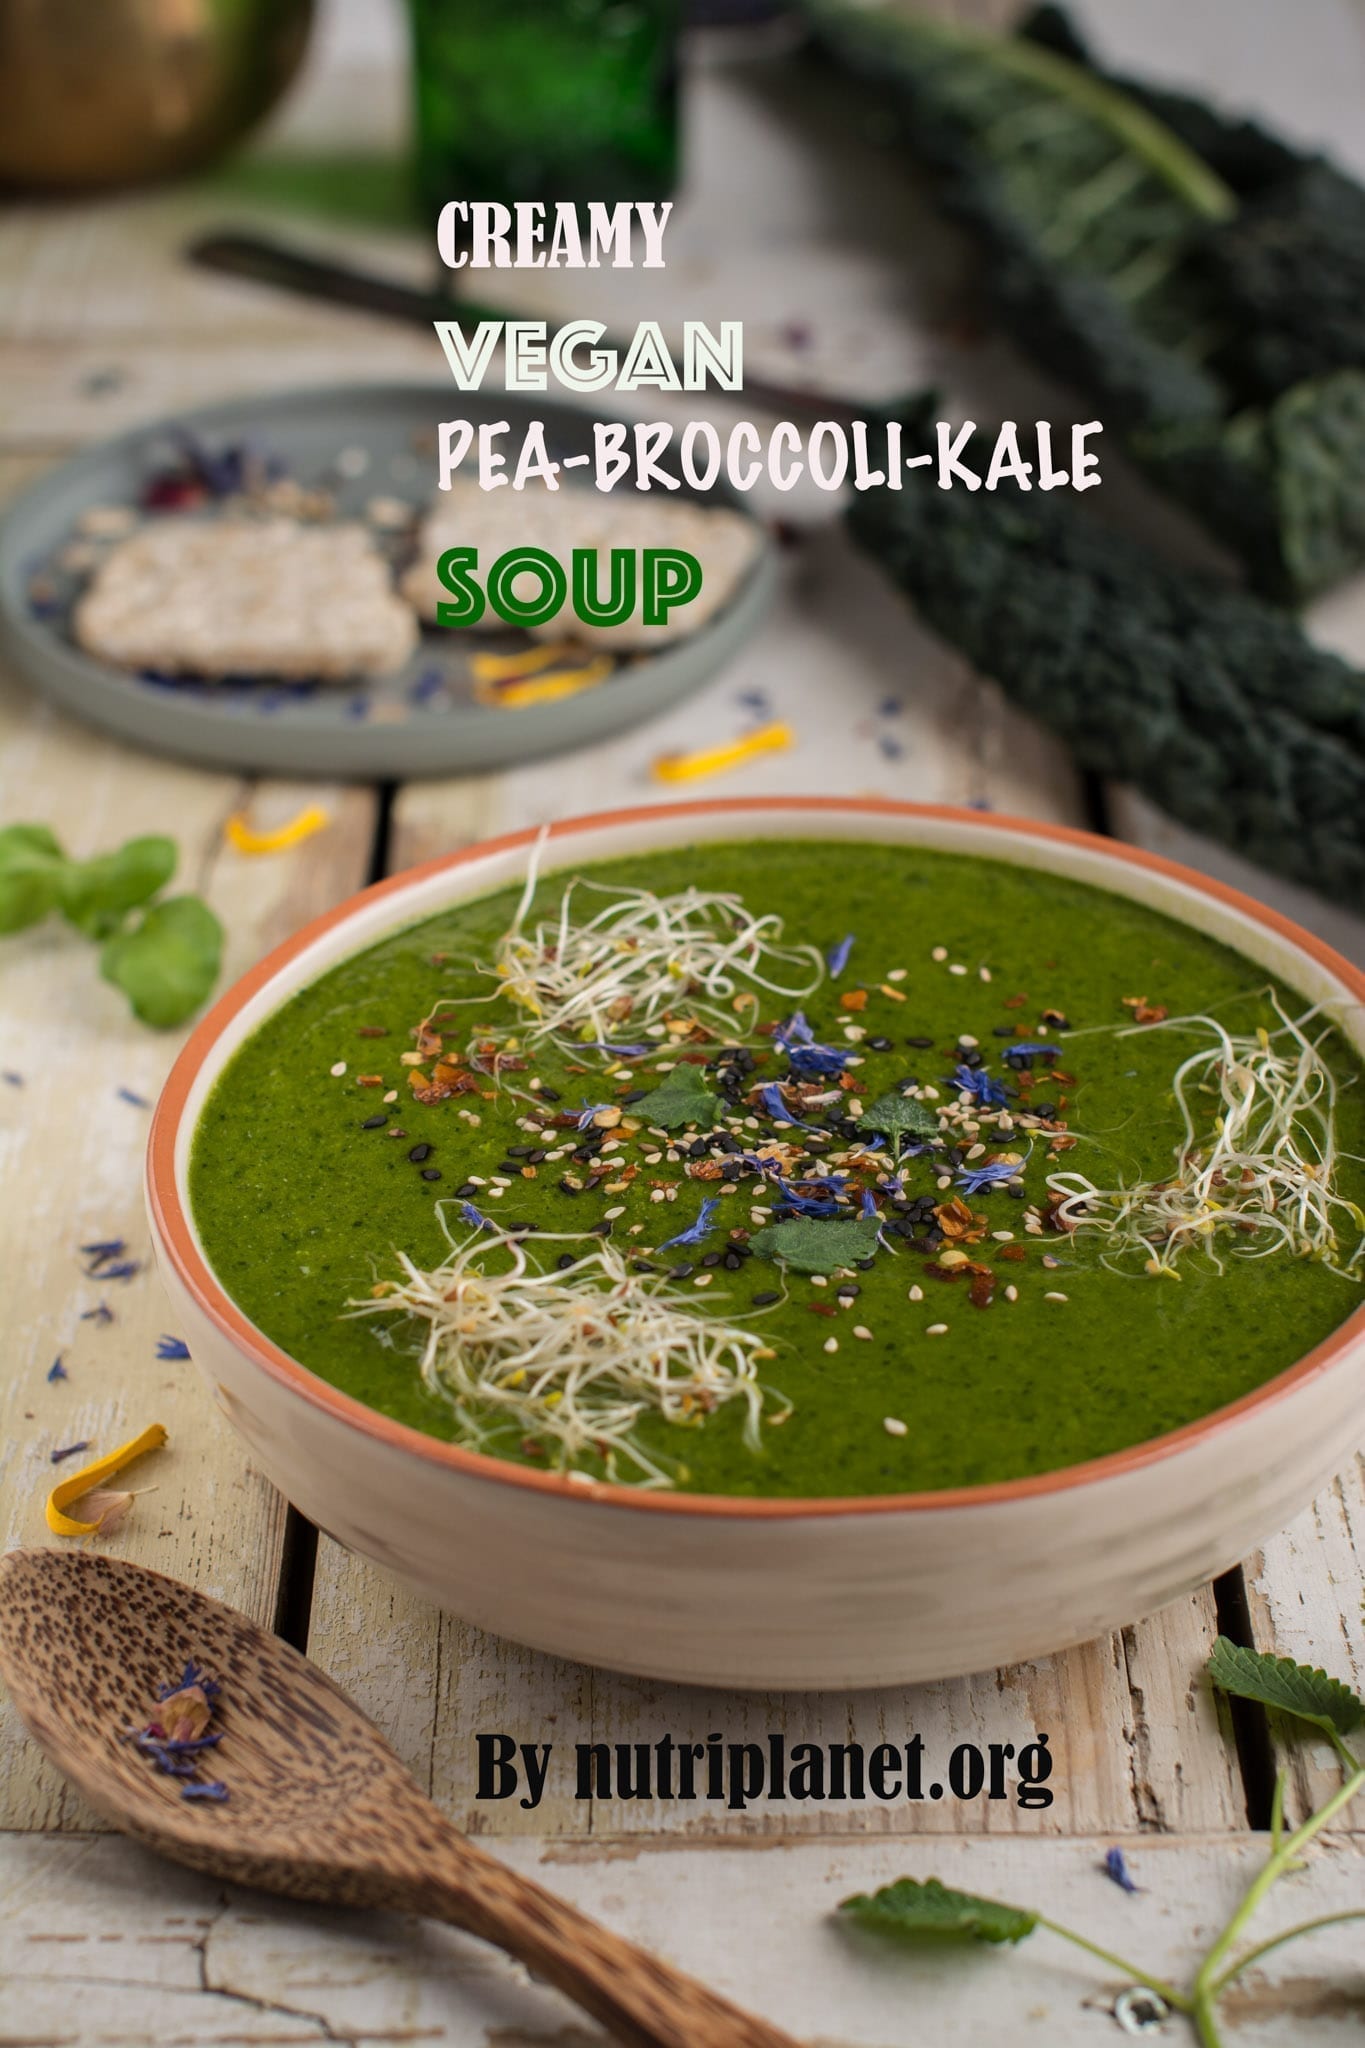 Creamy Vegan Soup with Peas, Broccoli and Kale